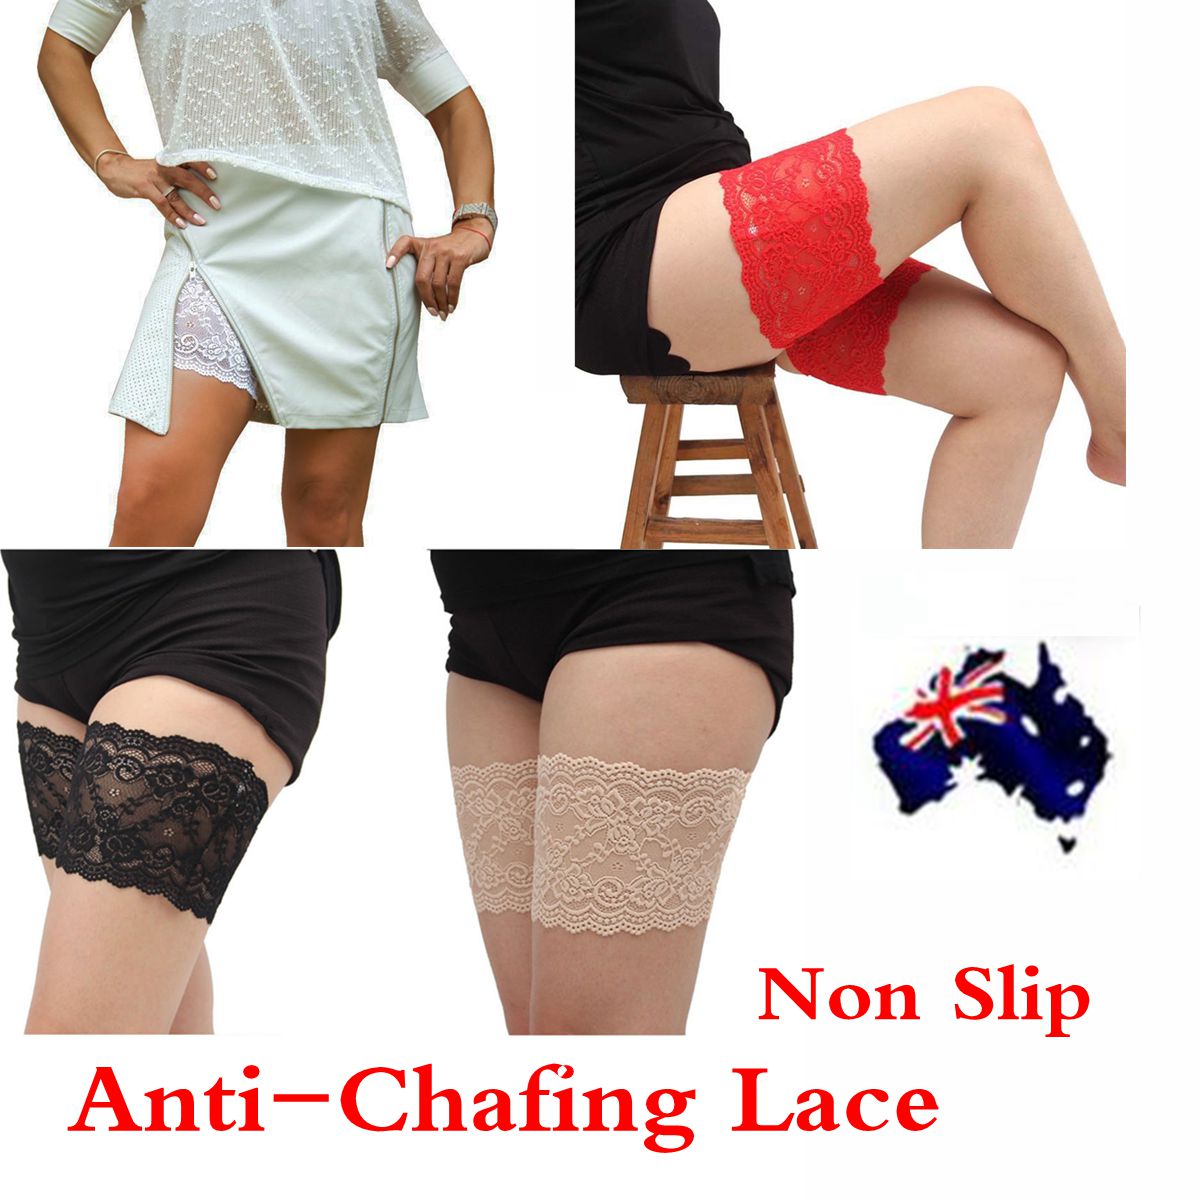 Anti Chafing Lace Thigh Bands Chafe Women Underwear NEWLY